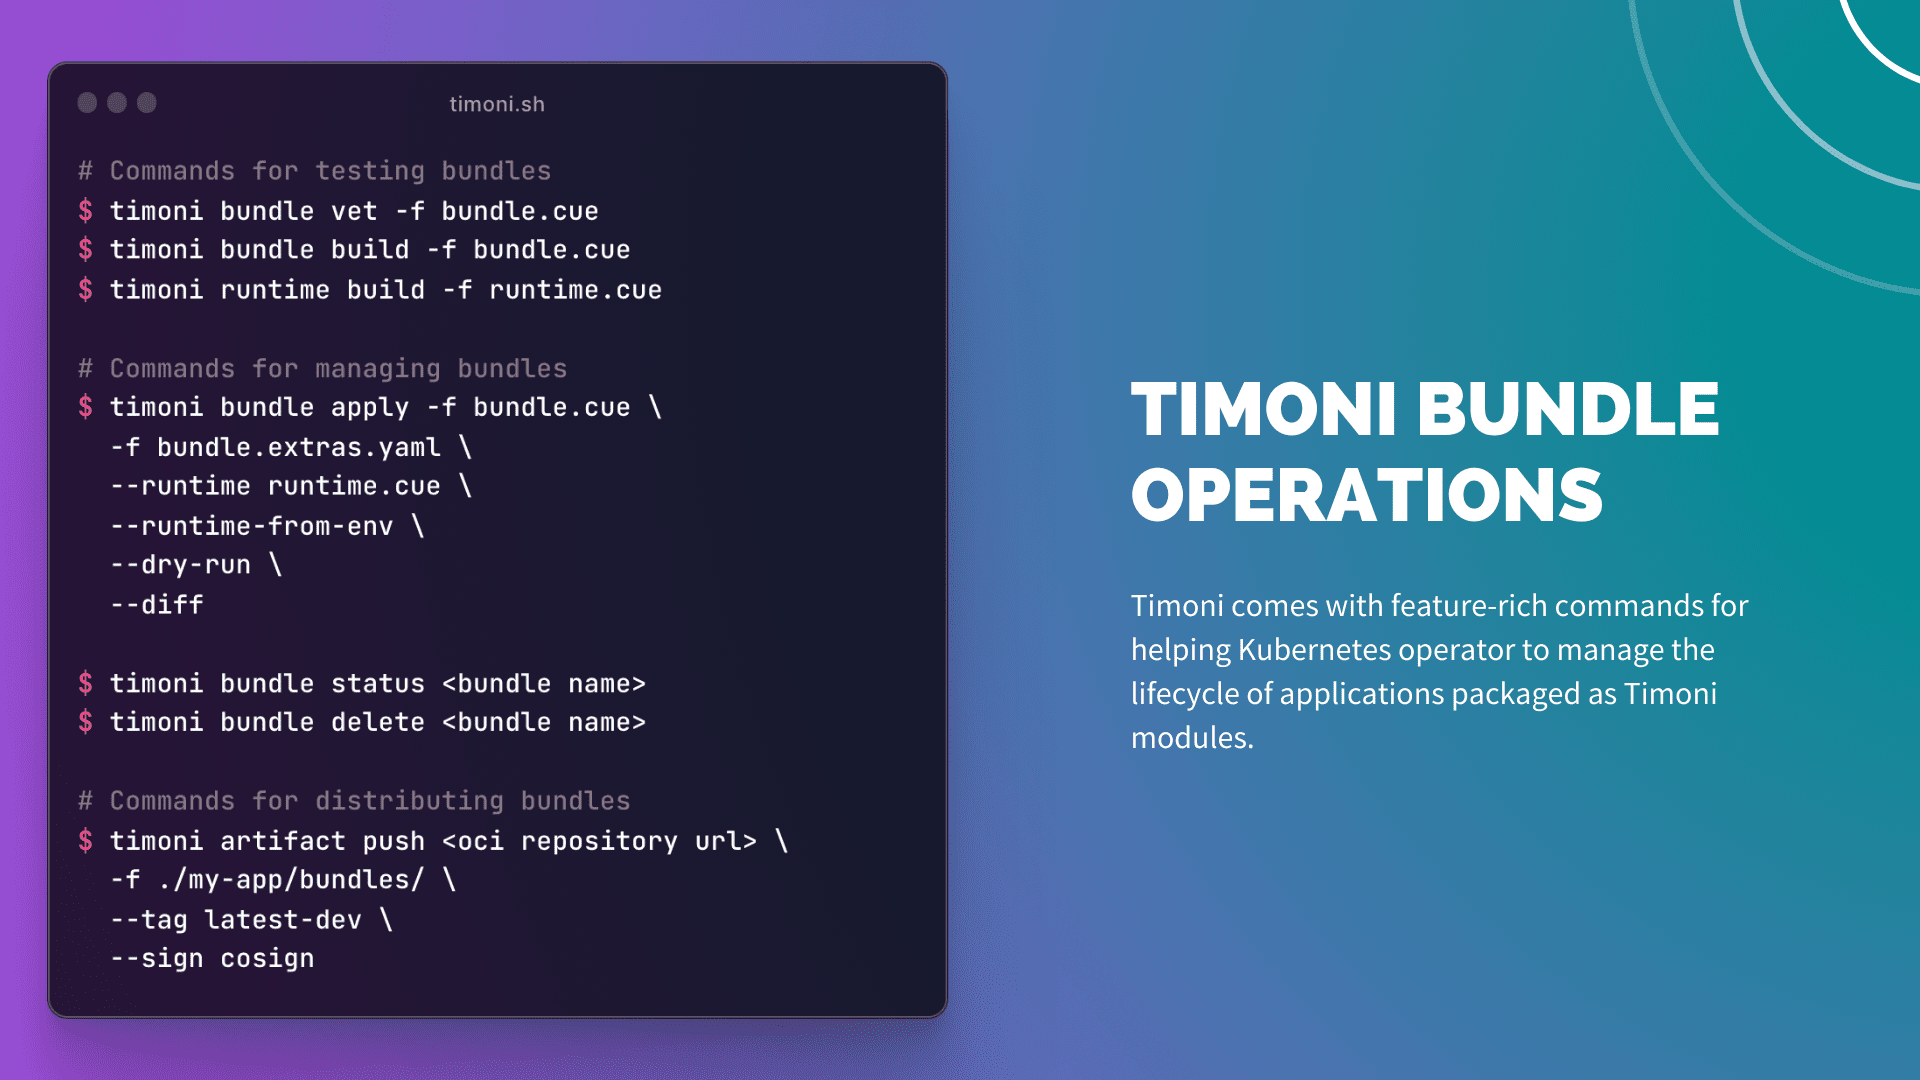 Timoni bundle operations